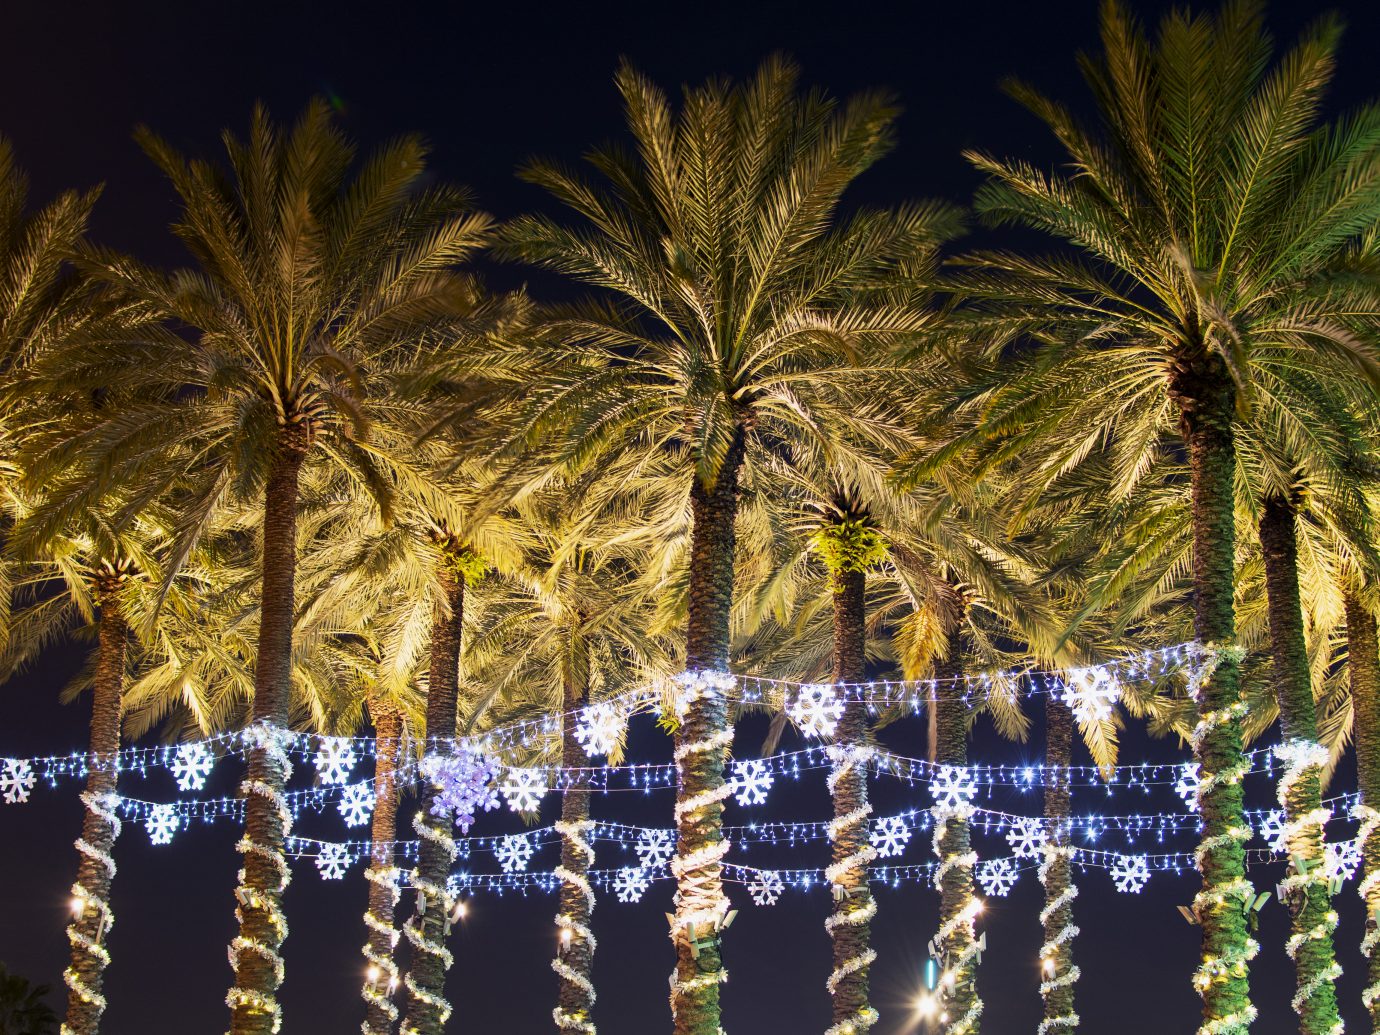 Christmas holiday illumination on palm trees in Florida.